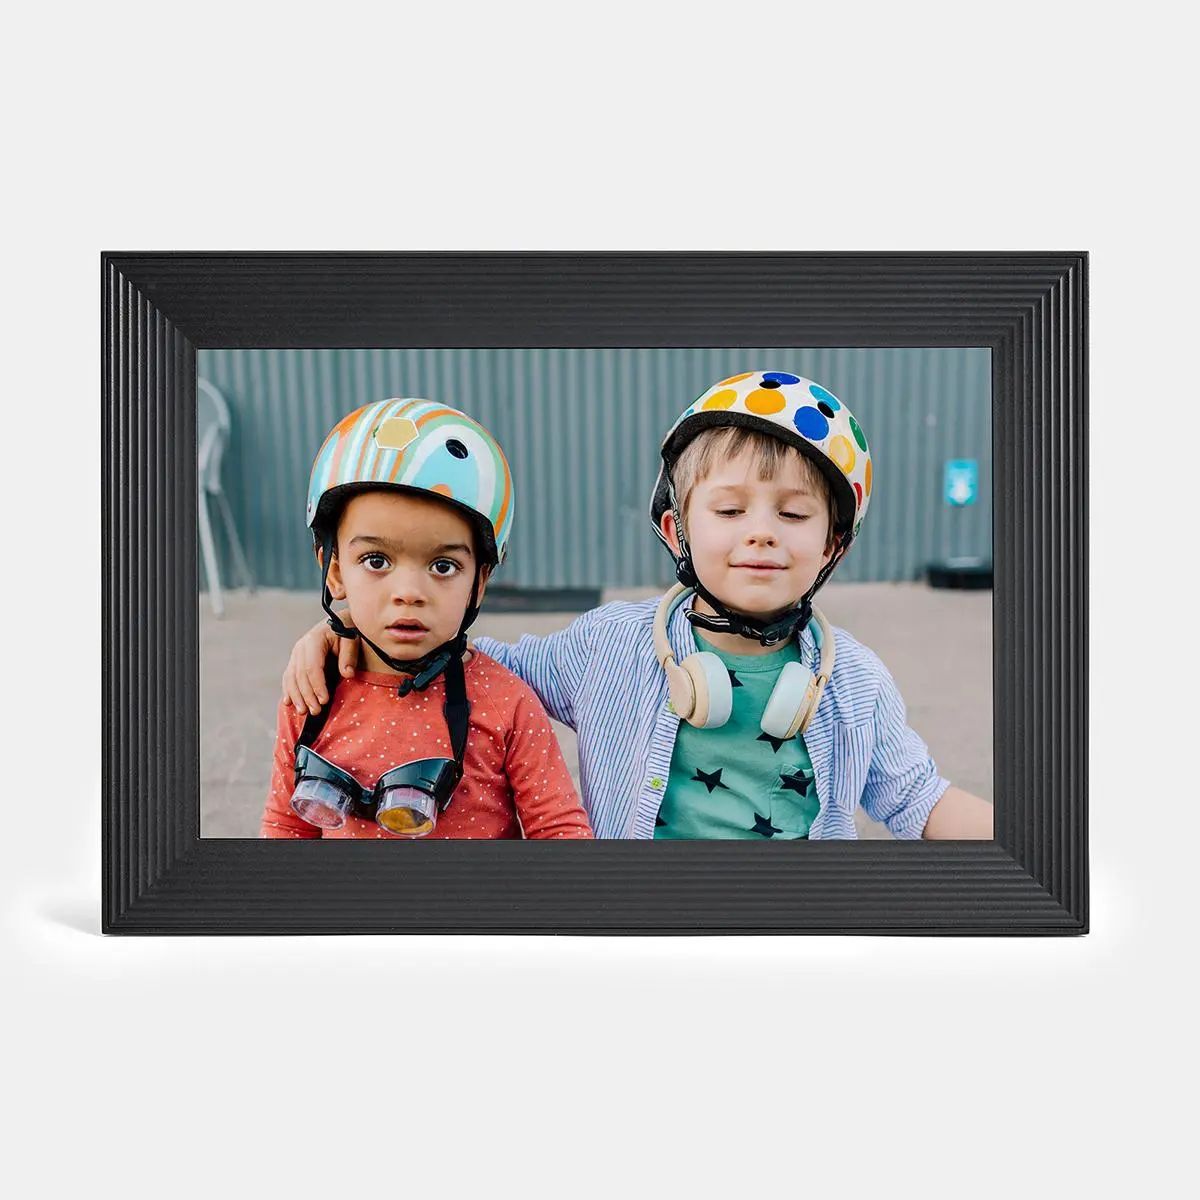 Best Digital Photo Frames 2022: WiFi Picture Frame Display Photos, Art